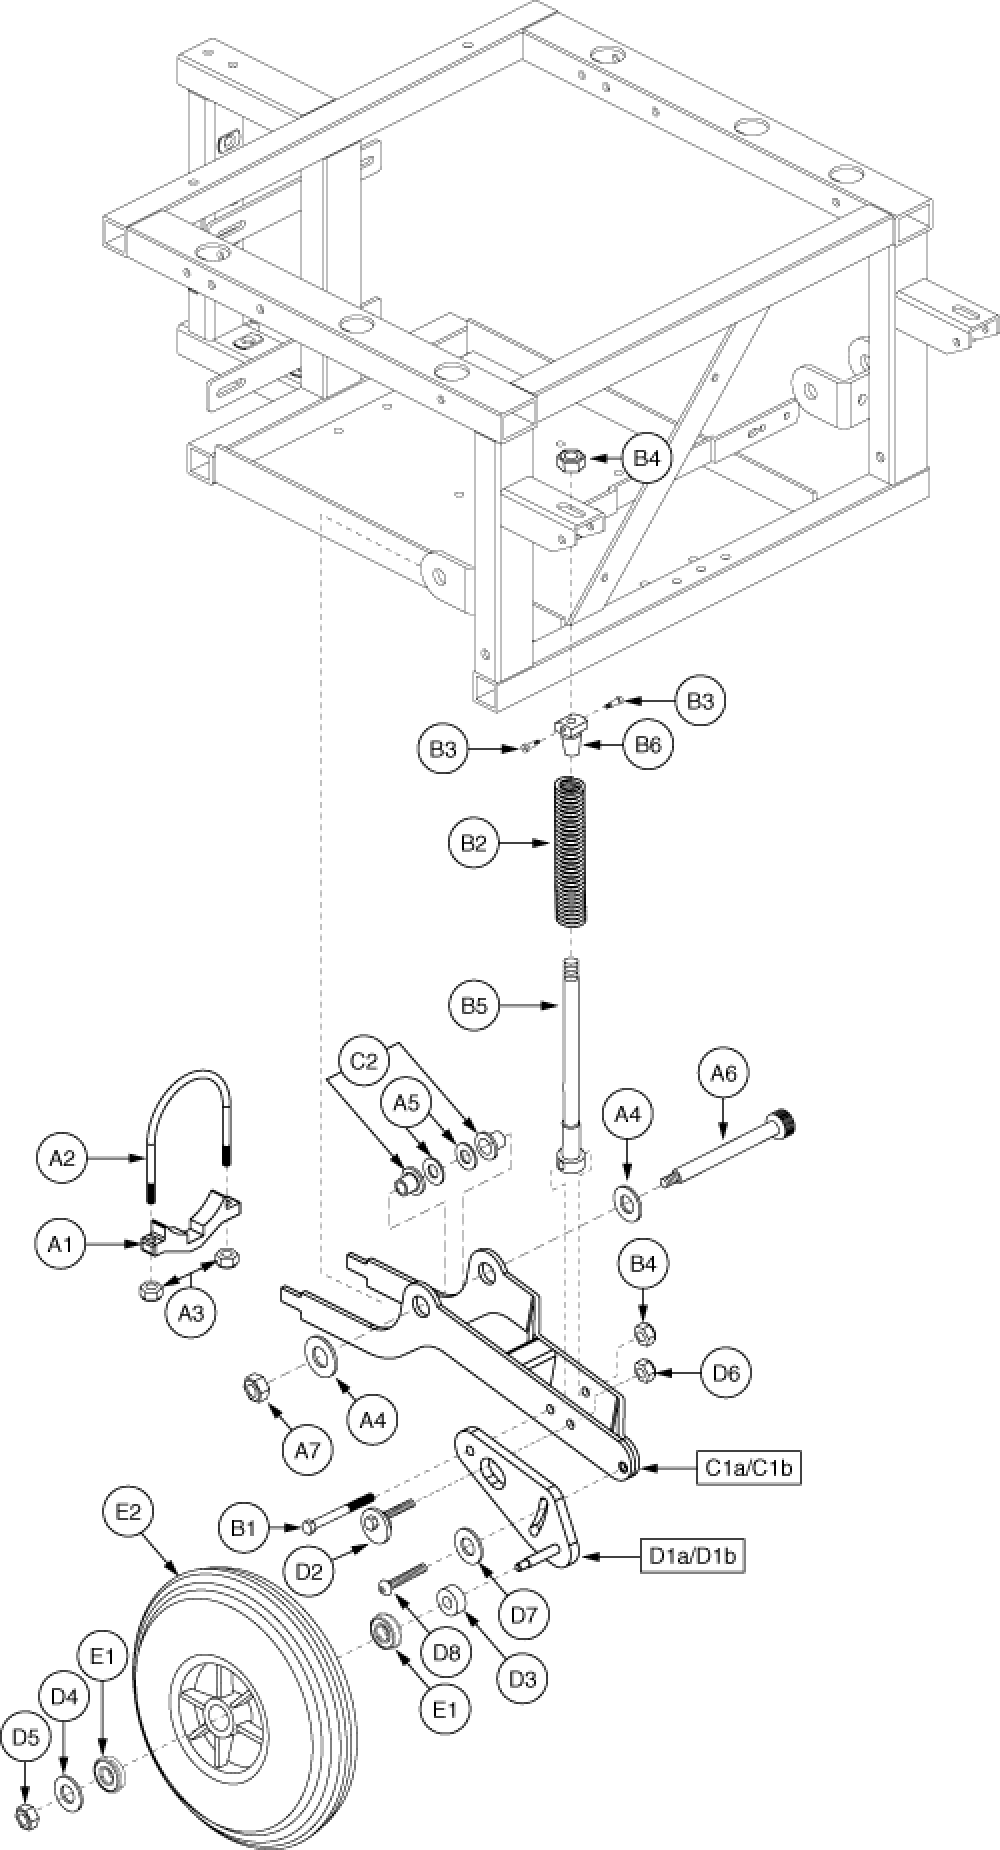 Anti-tip Assembly - Gen.6 parts diagram